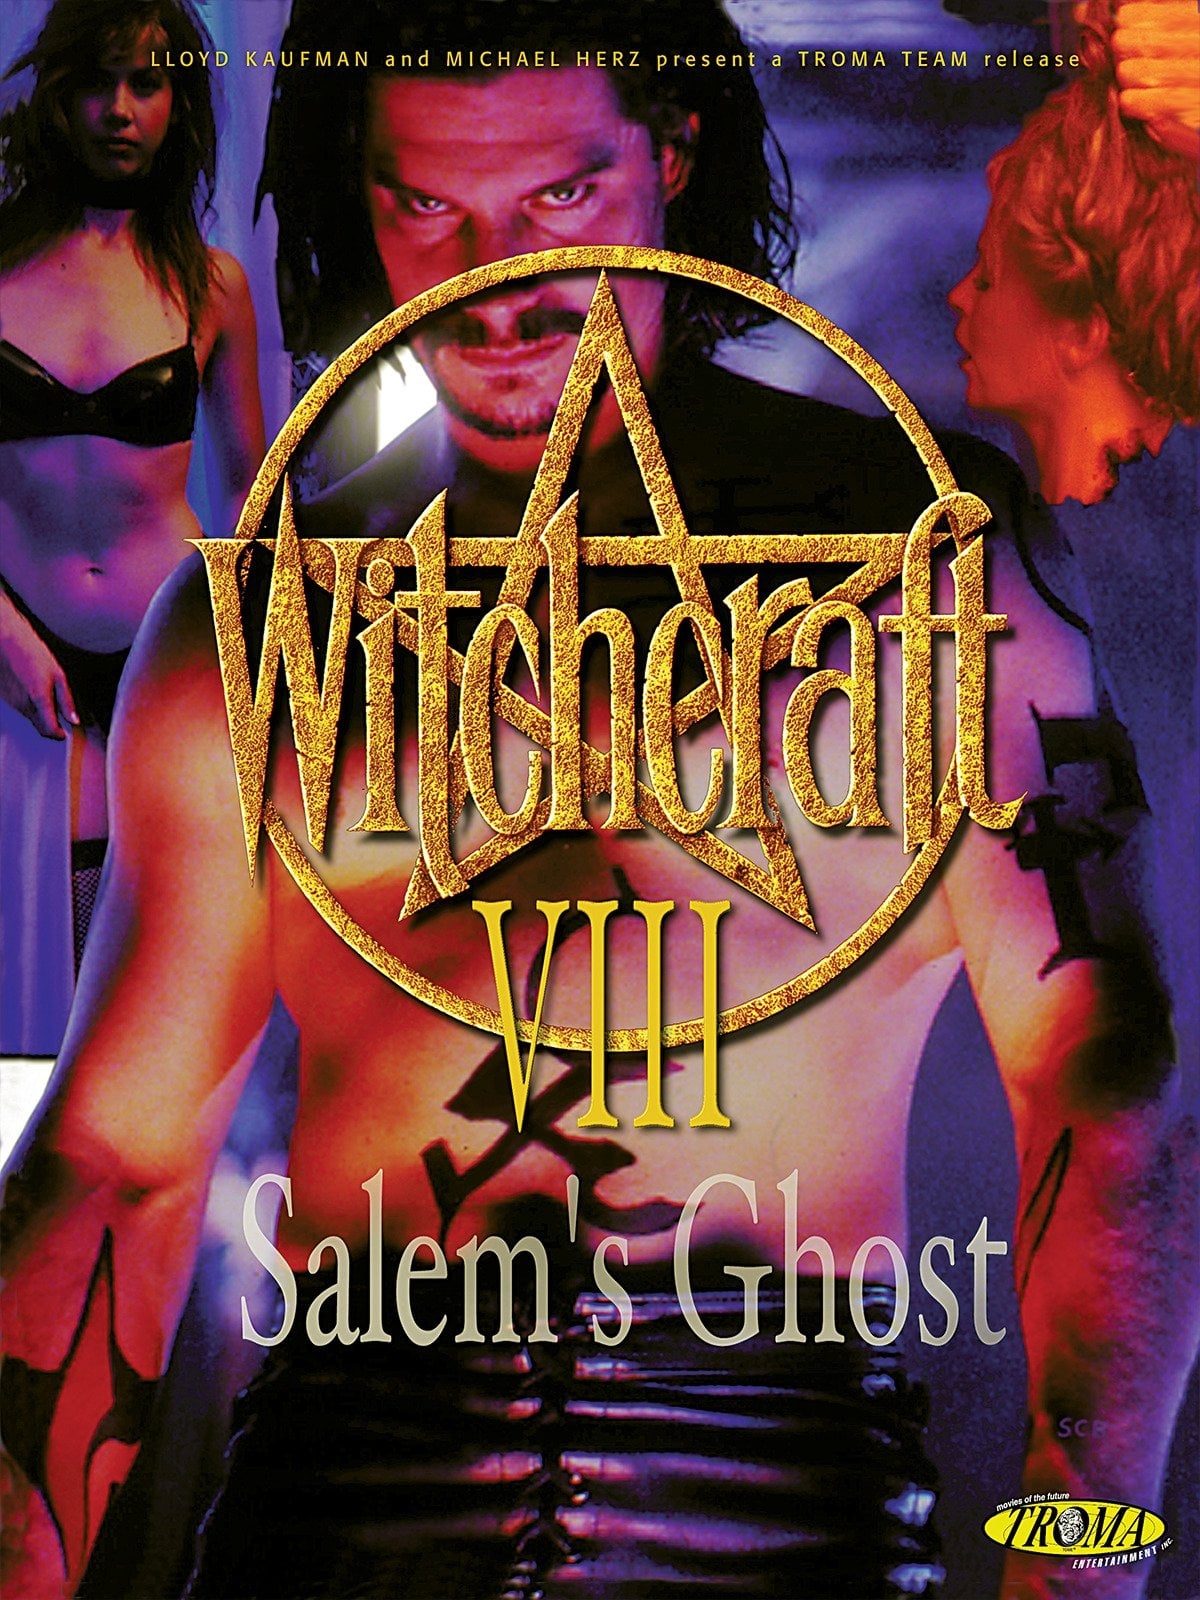 Witchcraft VIII: Salem's Ghost poster